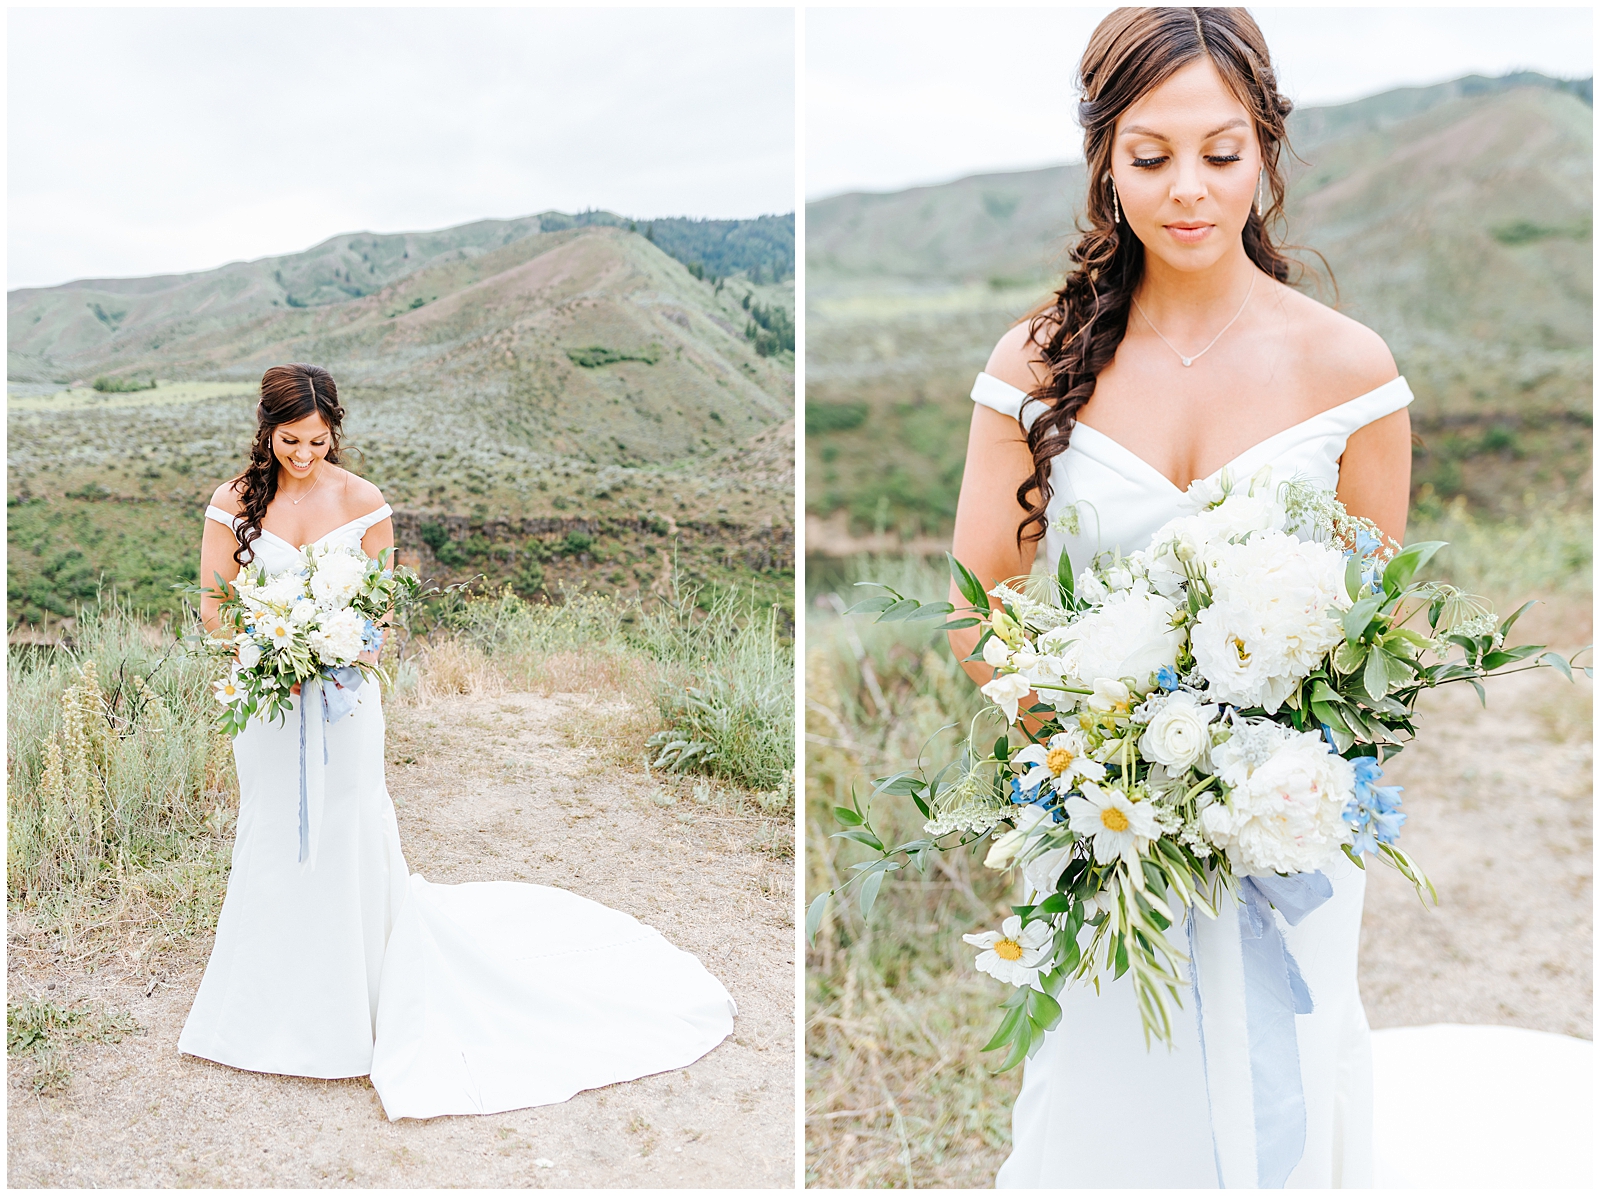 Bridal Portraits at Boise Foothills Wedding Overlooking Lucky Peak Reservoir